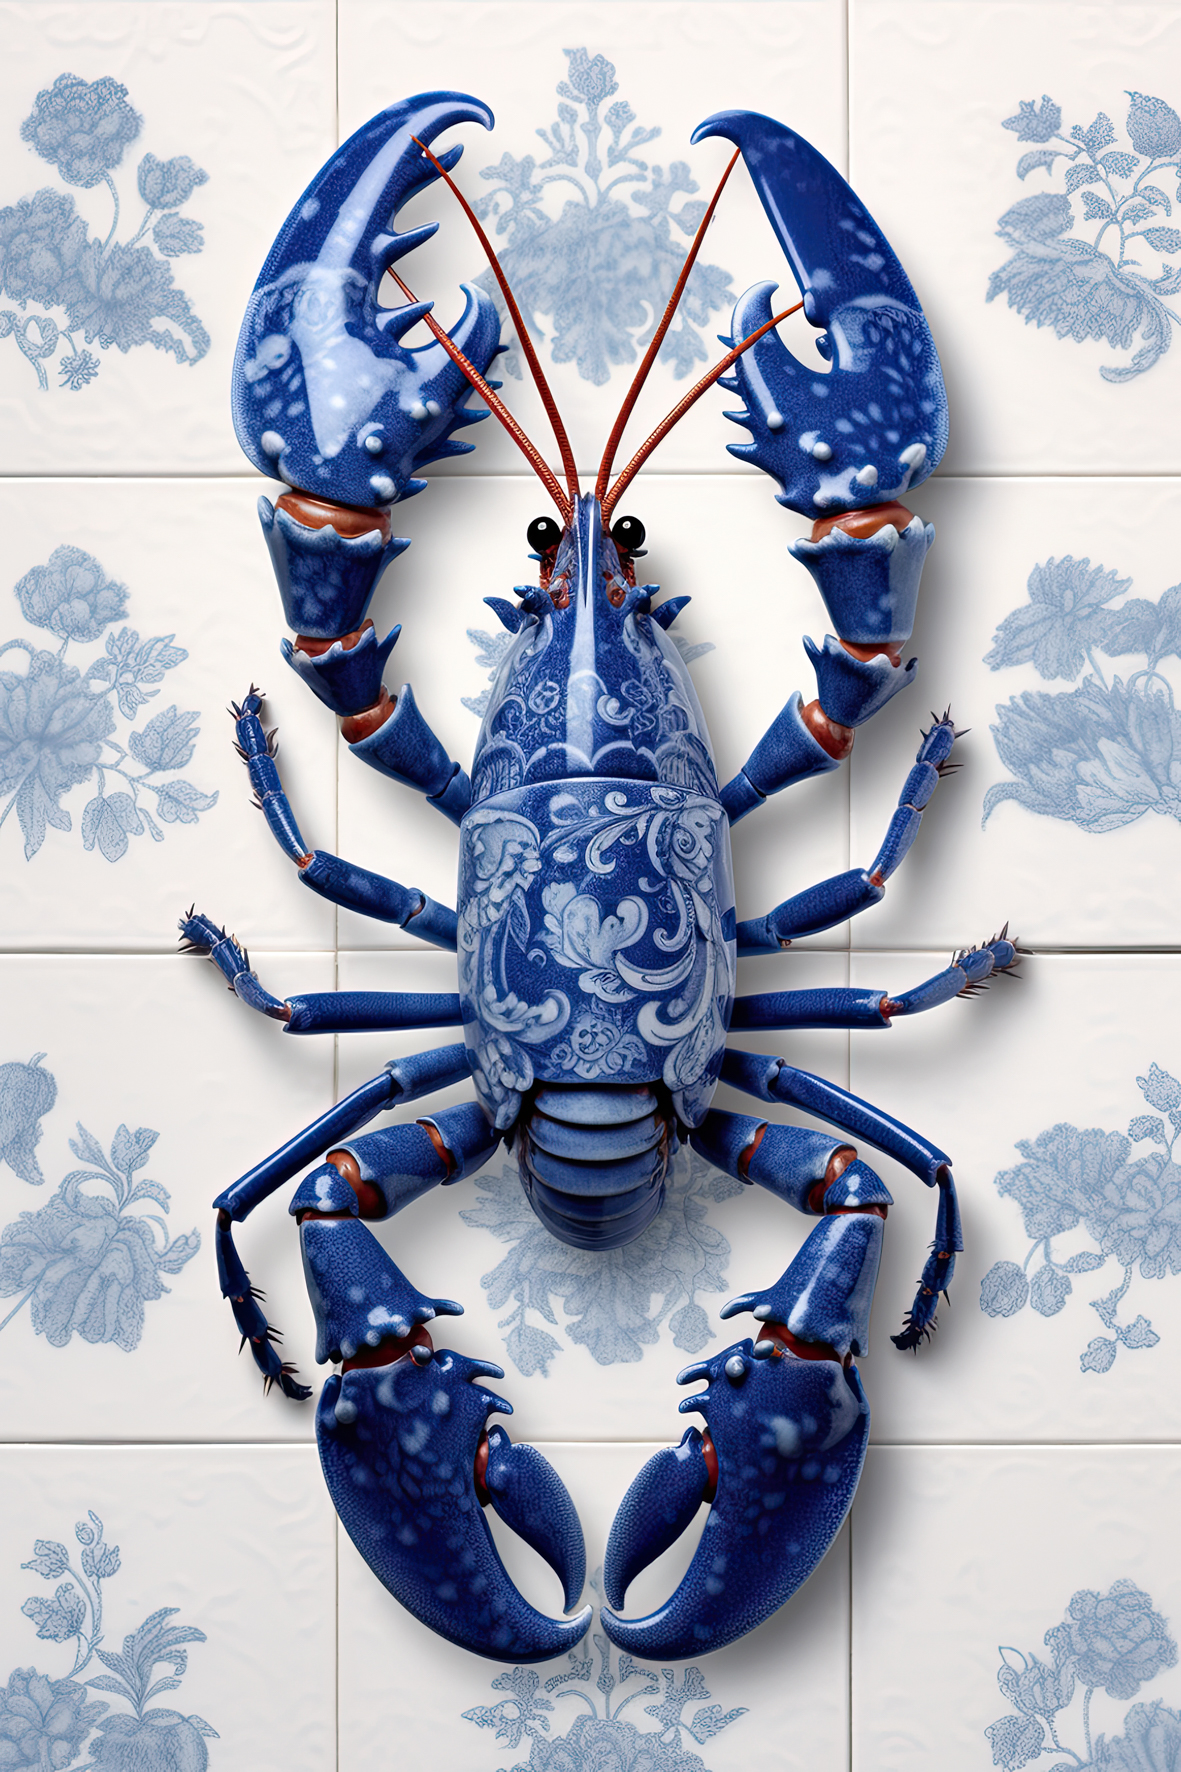 Lobster Luxe - Delft Blue Kitchen Tile Beauty Marianne Ottemann